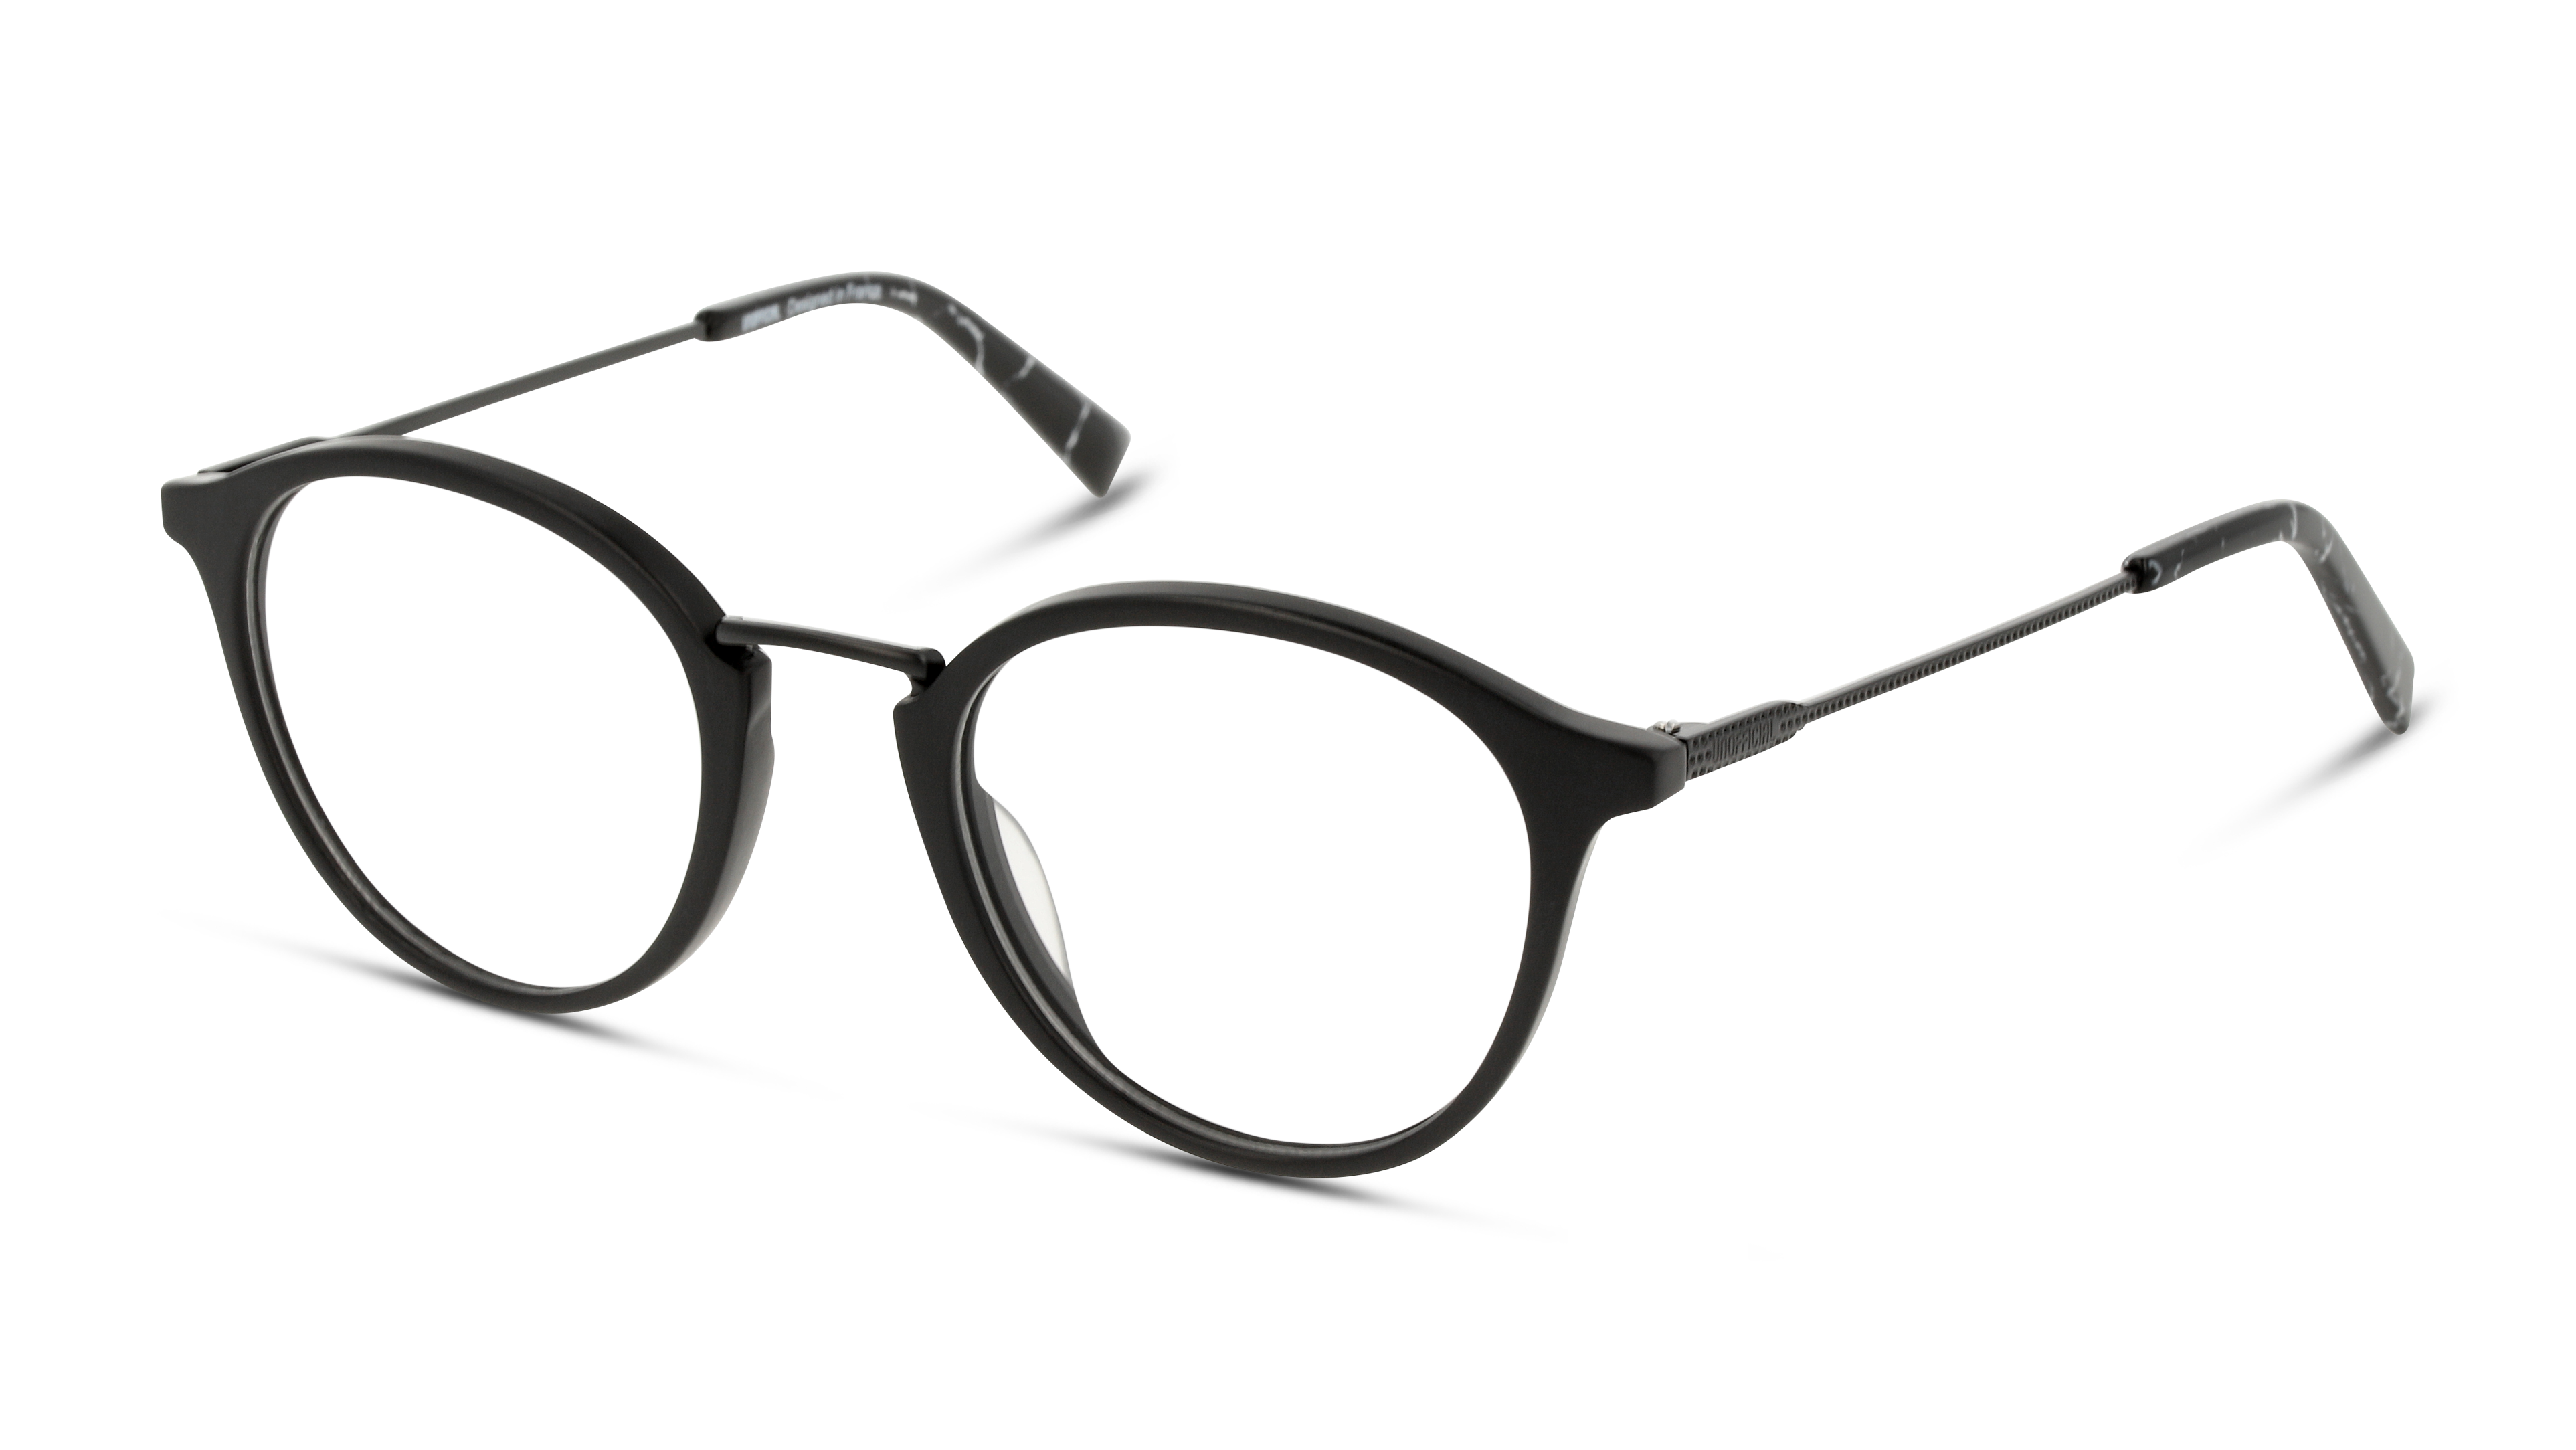 Angle_Left01 Unofficial UNOM0203 (BB00) Glasses Transparent / Black